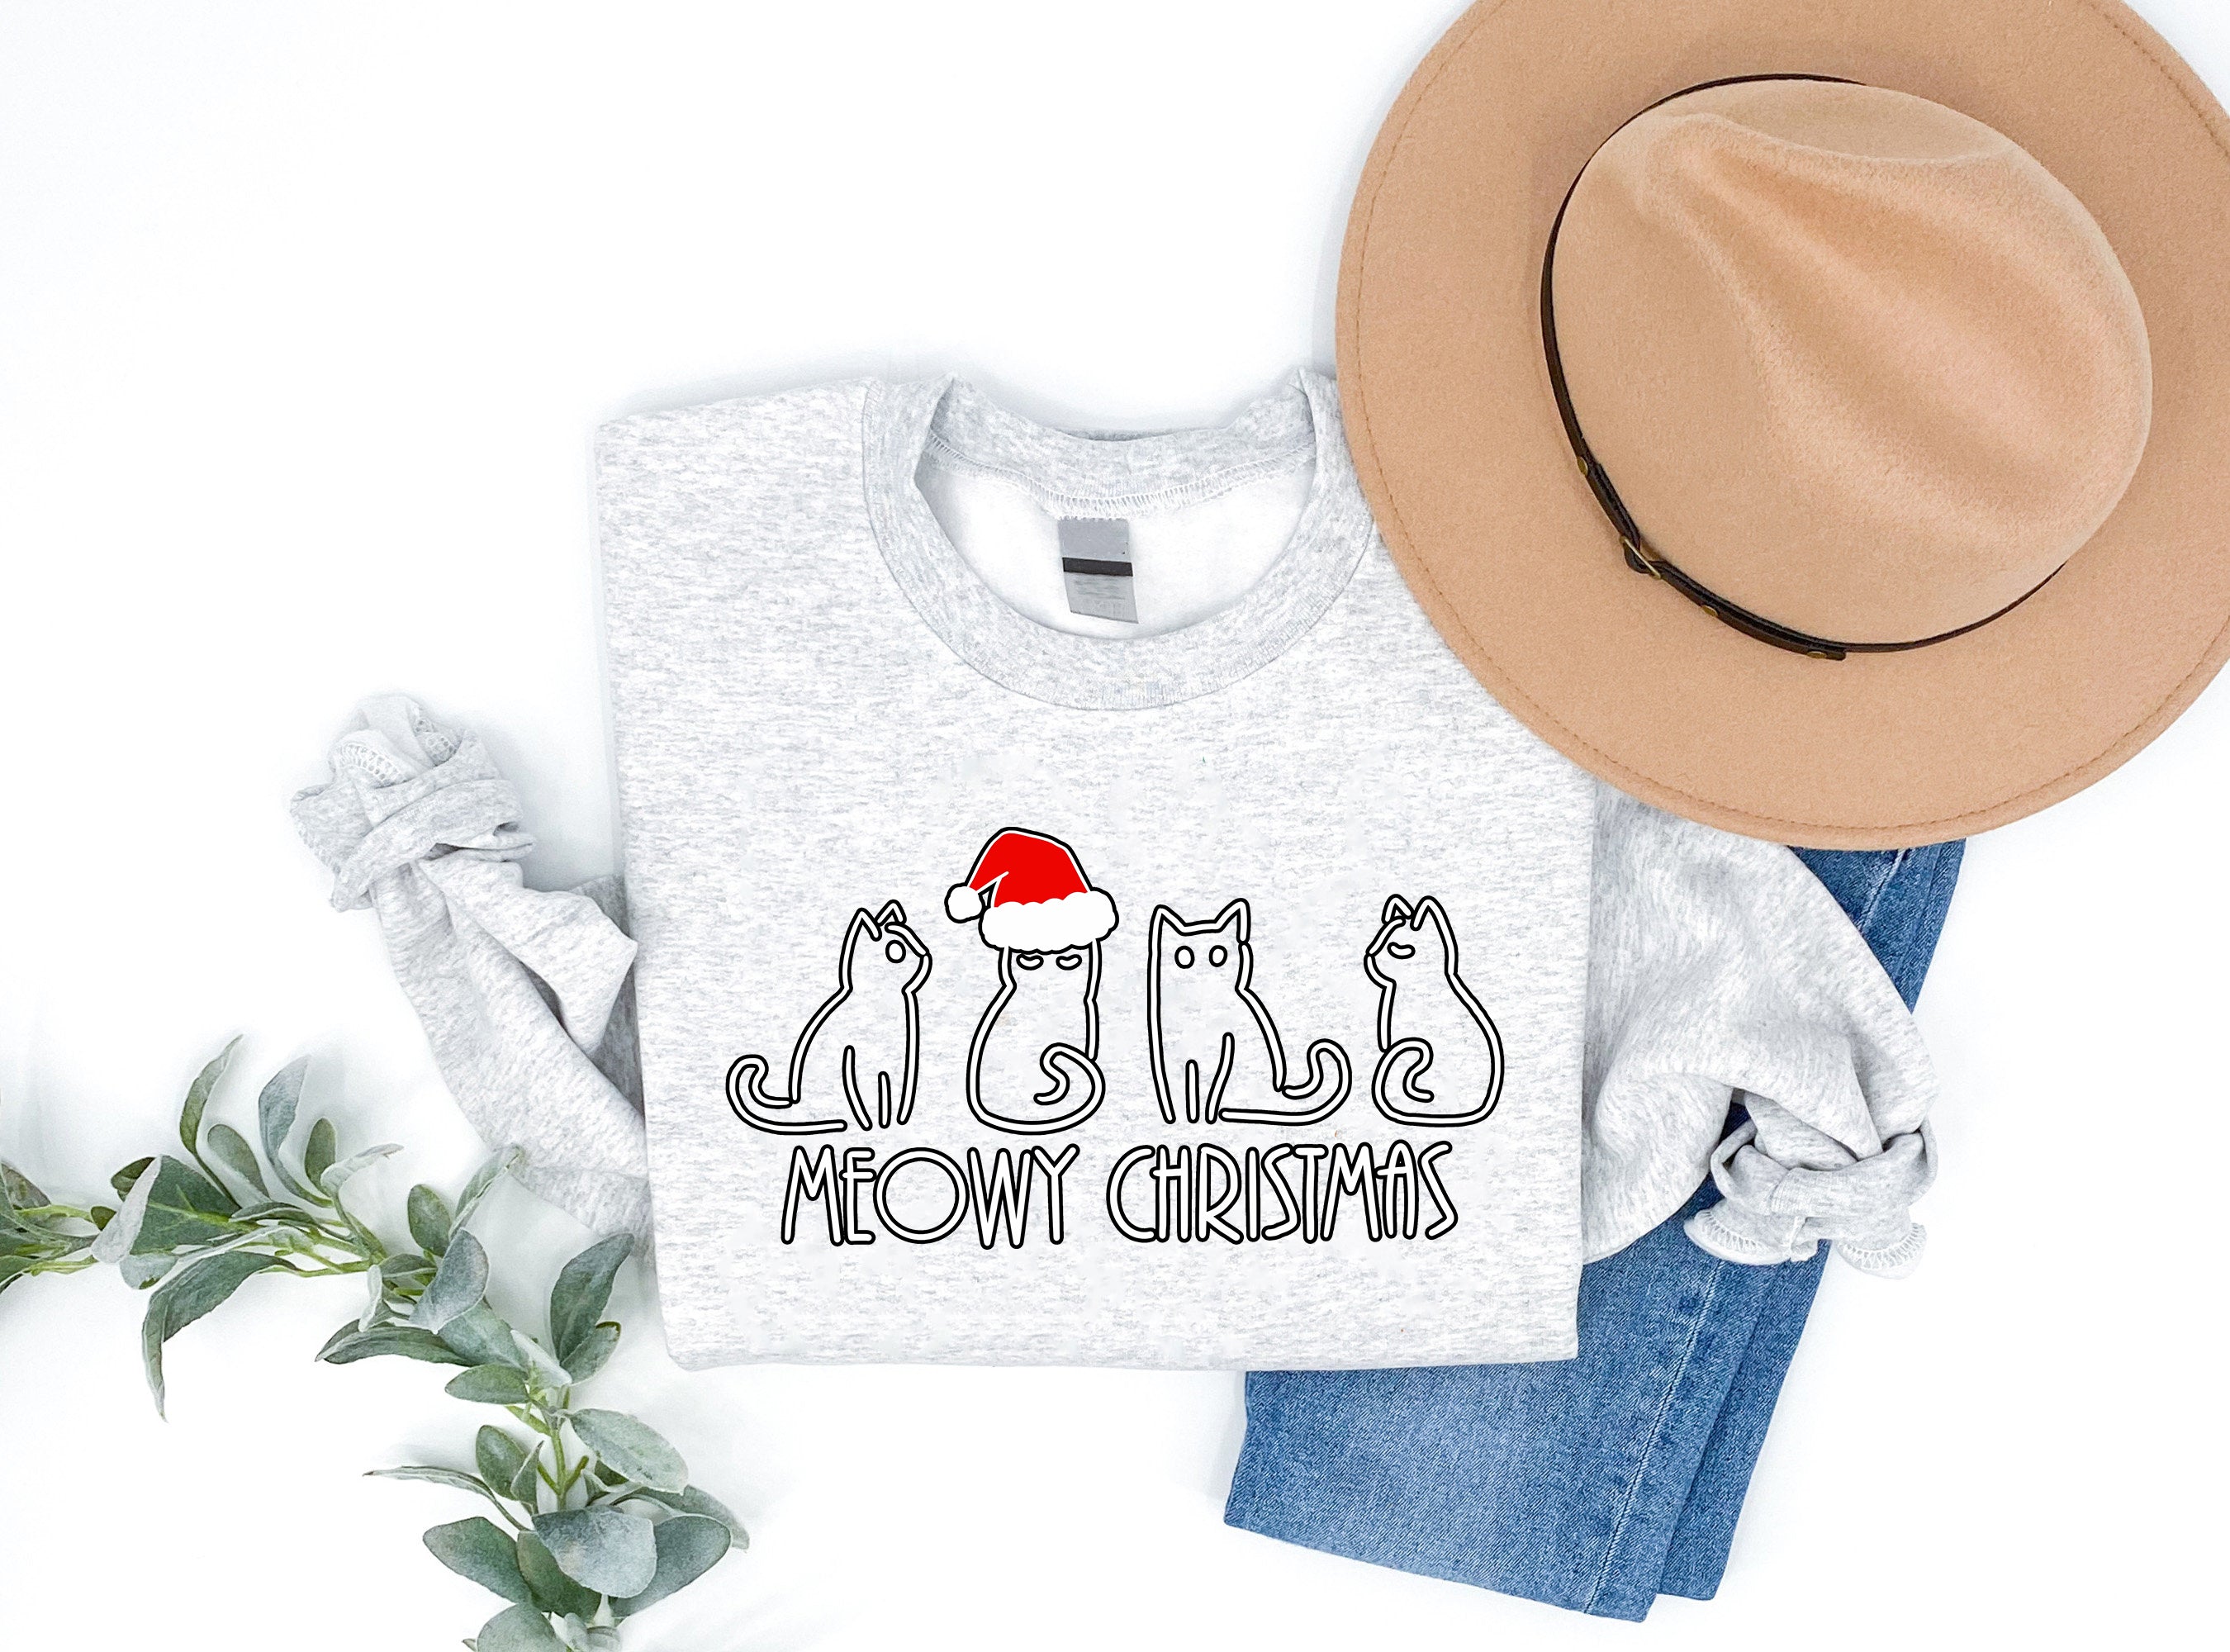 4 Cats 'Meowy Chirstmas' Pattern Family Christmas Matching Pajamas Tops Cute Gray Long Sleeve Sweatshirts With Dog Bandana